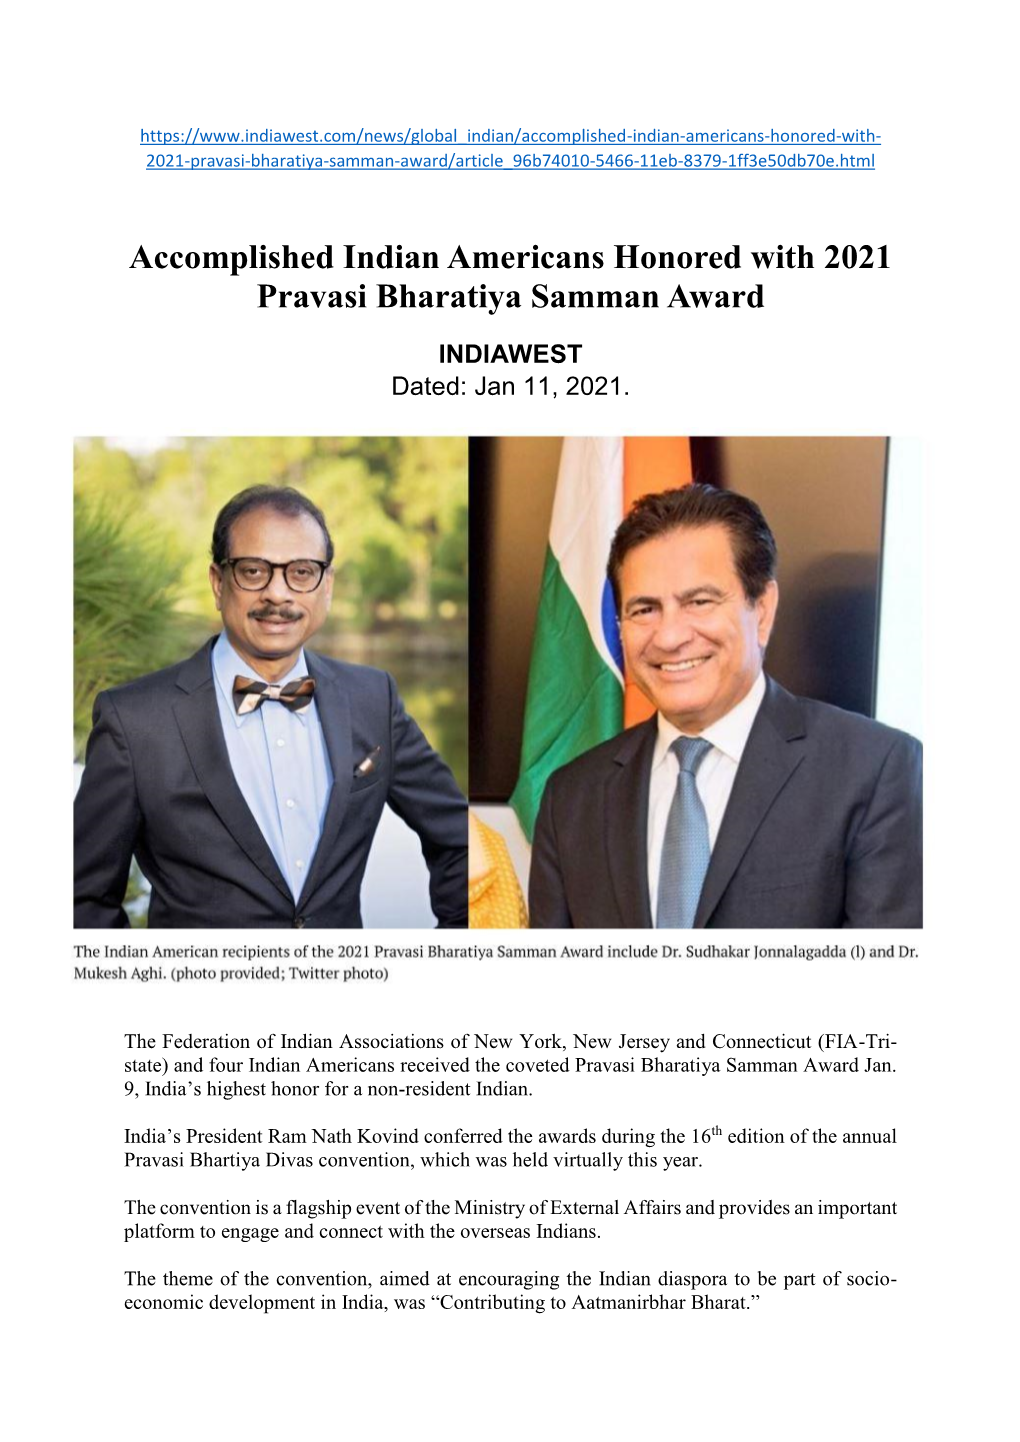 Accomplished Indian Americans Honored with 2021 Pravasi Bharatiya Samman Award